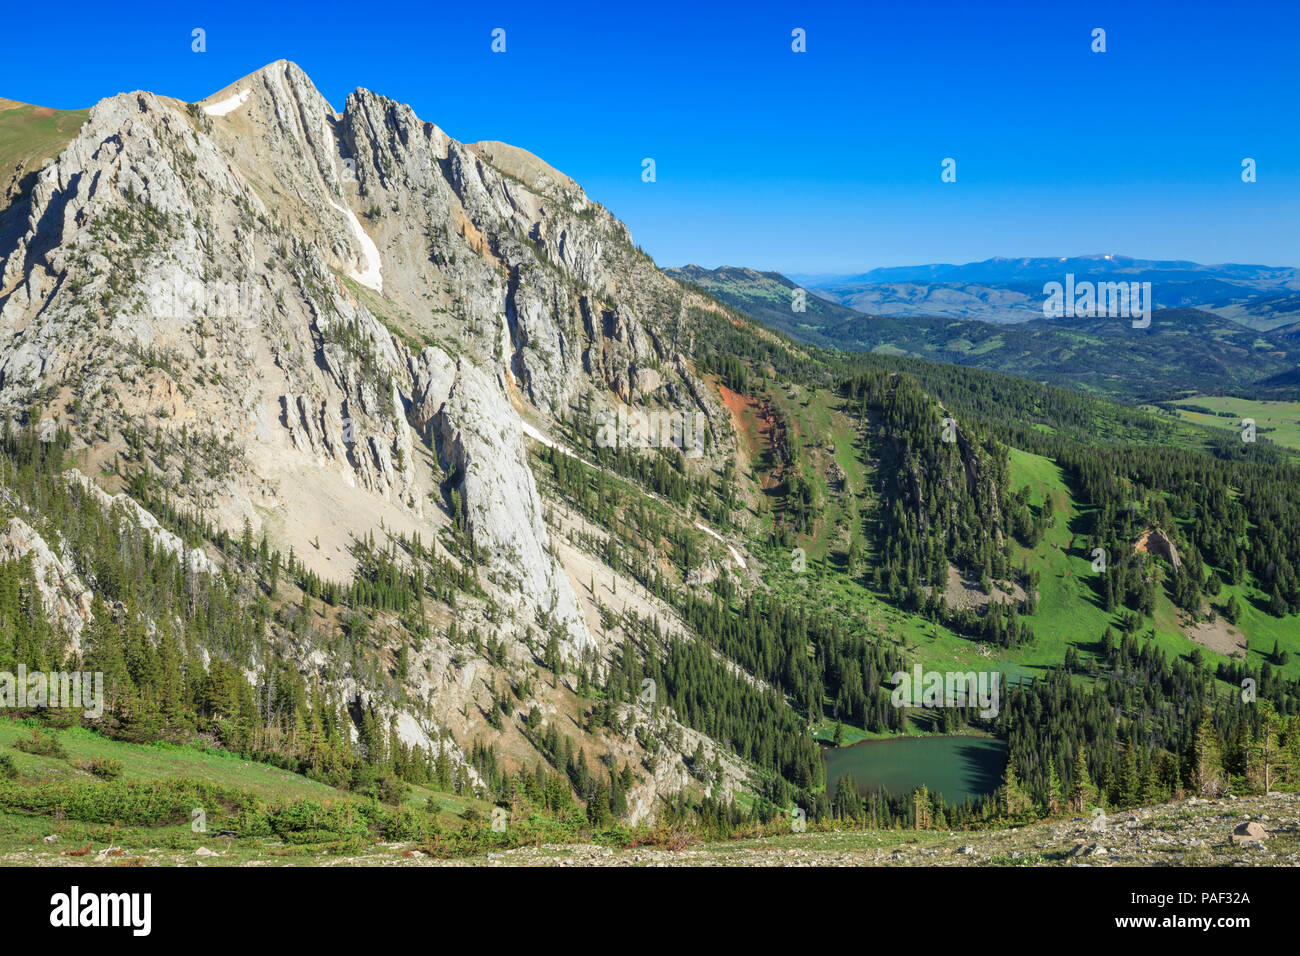 ainger lake below the bridger mountains near bozeman, montana Stock Photo